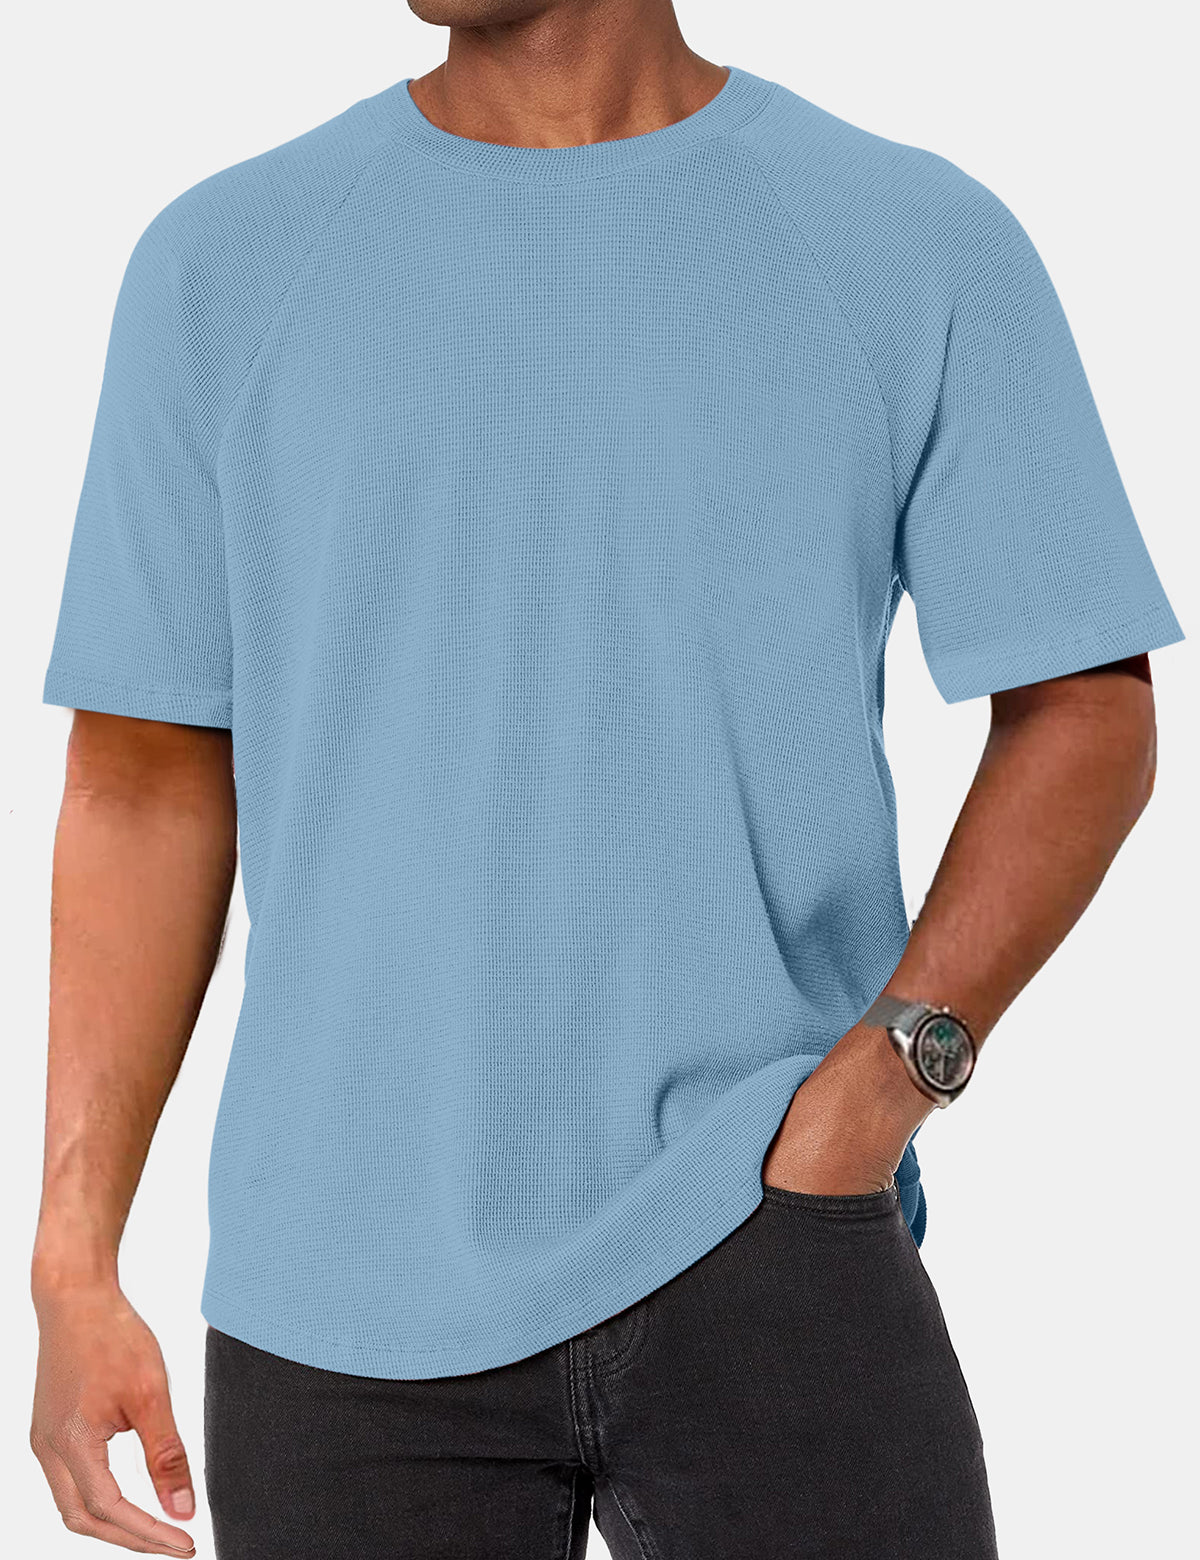 Men's Basic Casual Comfort Raglan Short Sleeve T-Shirt